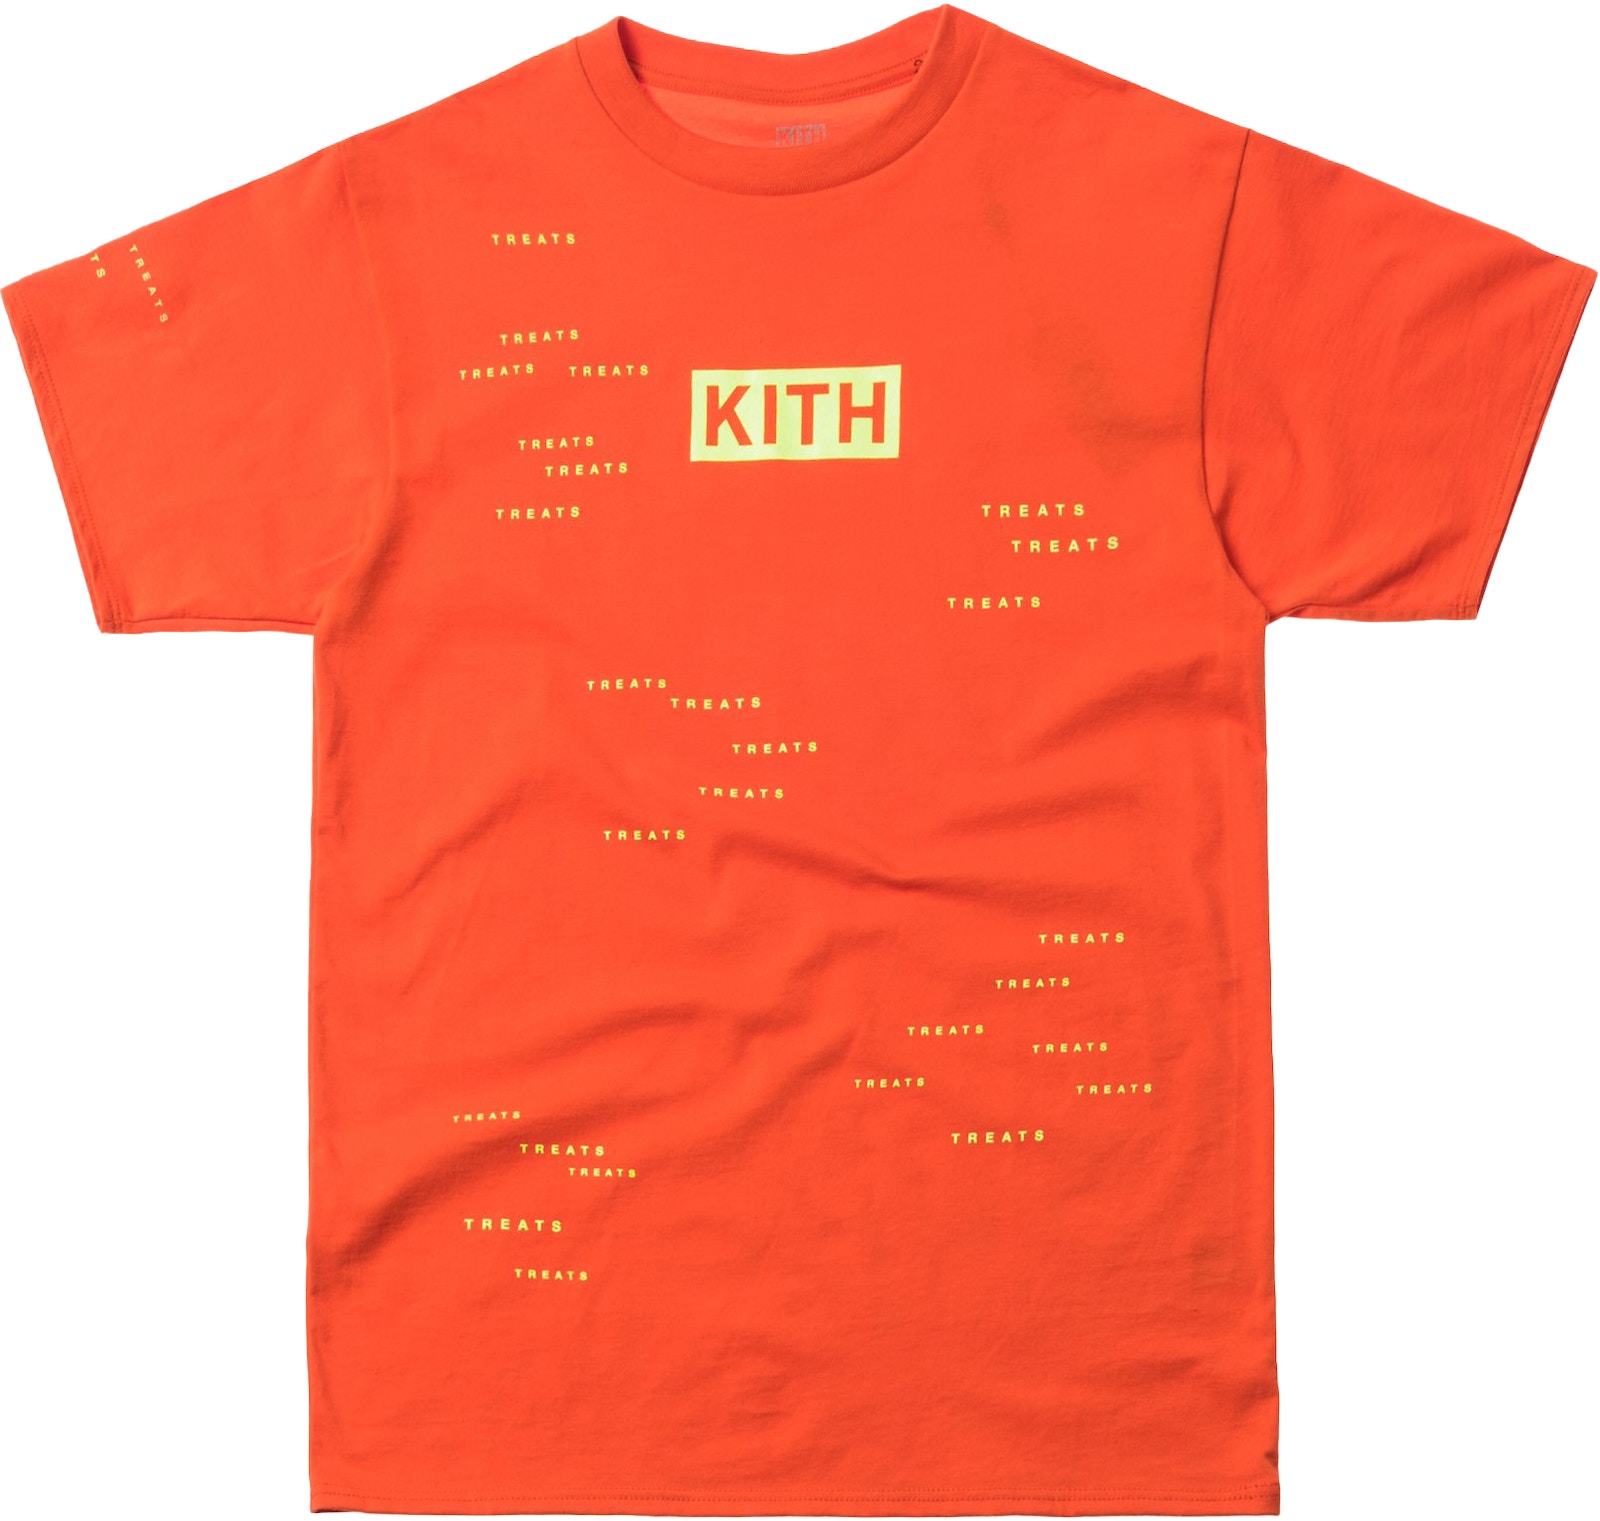 Kith Treats Encrpyted Tee Orange - FW18